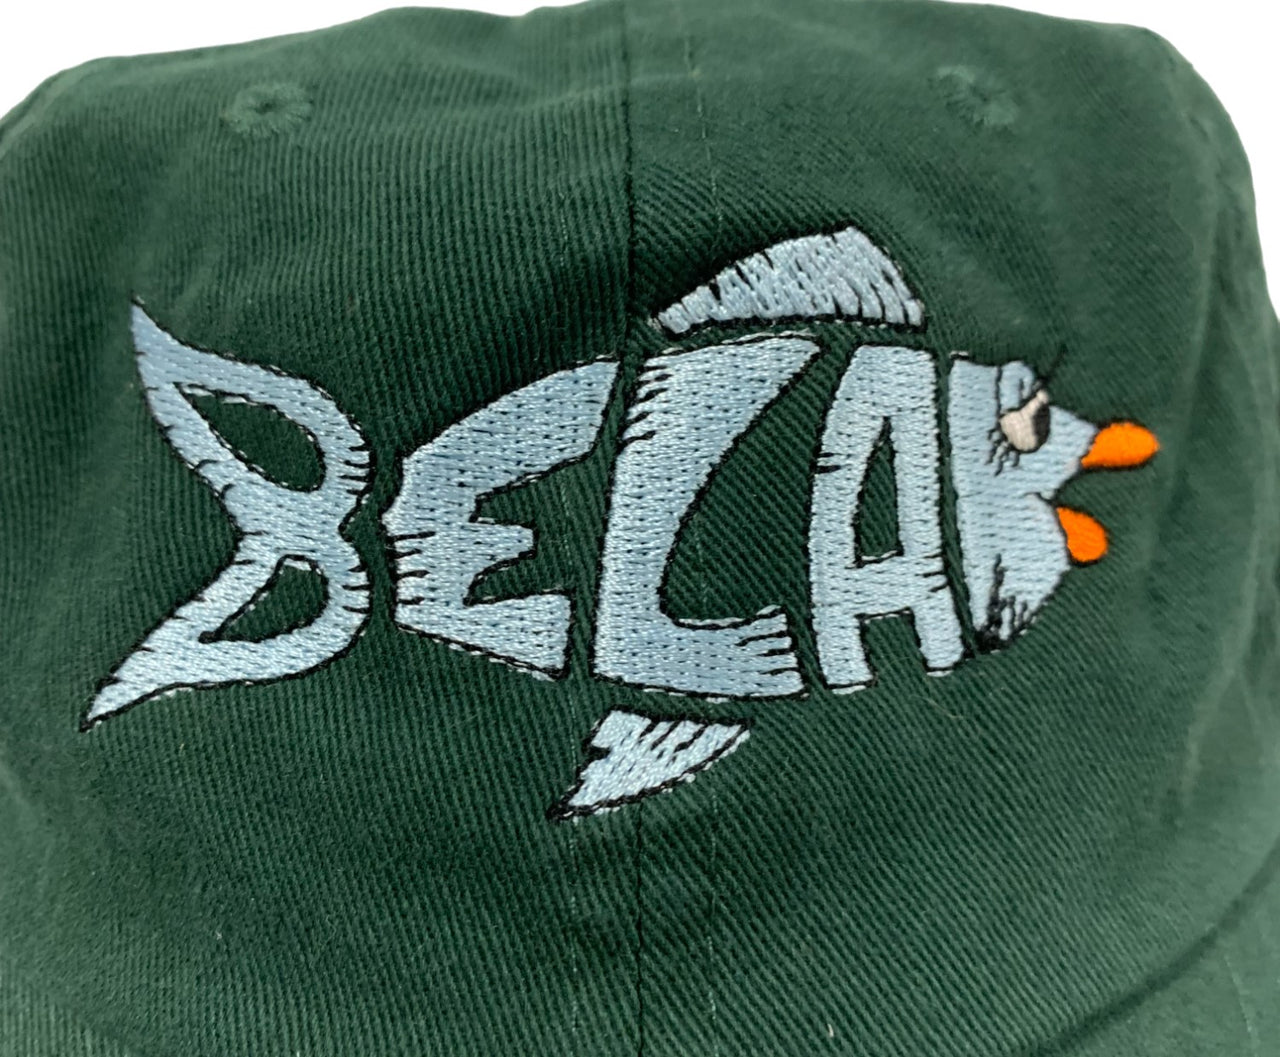 BELA Hat - Dark Green - TinCanFish